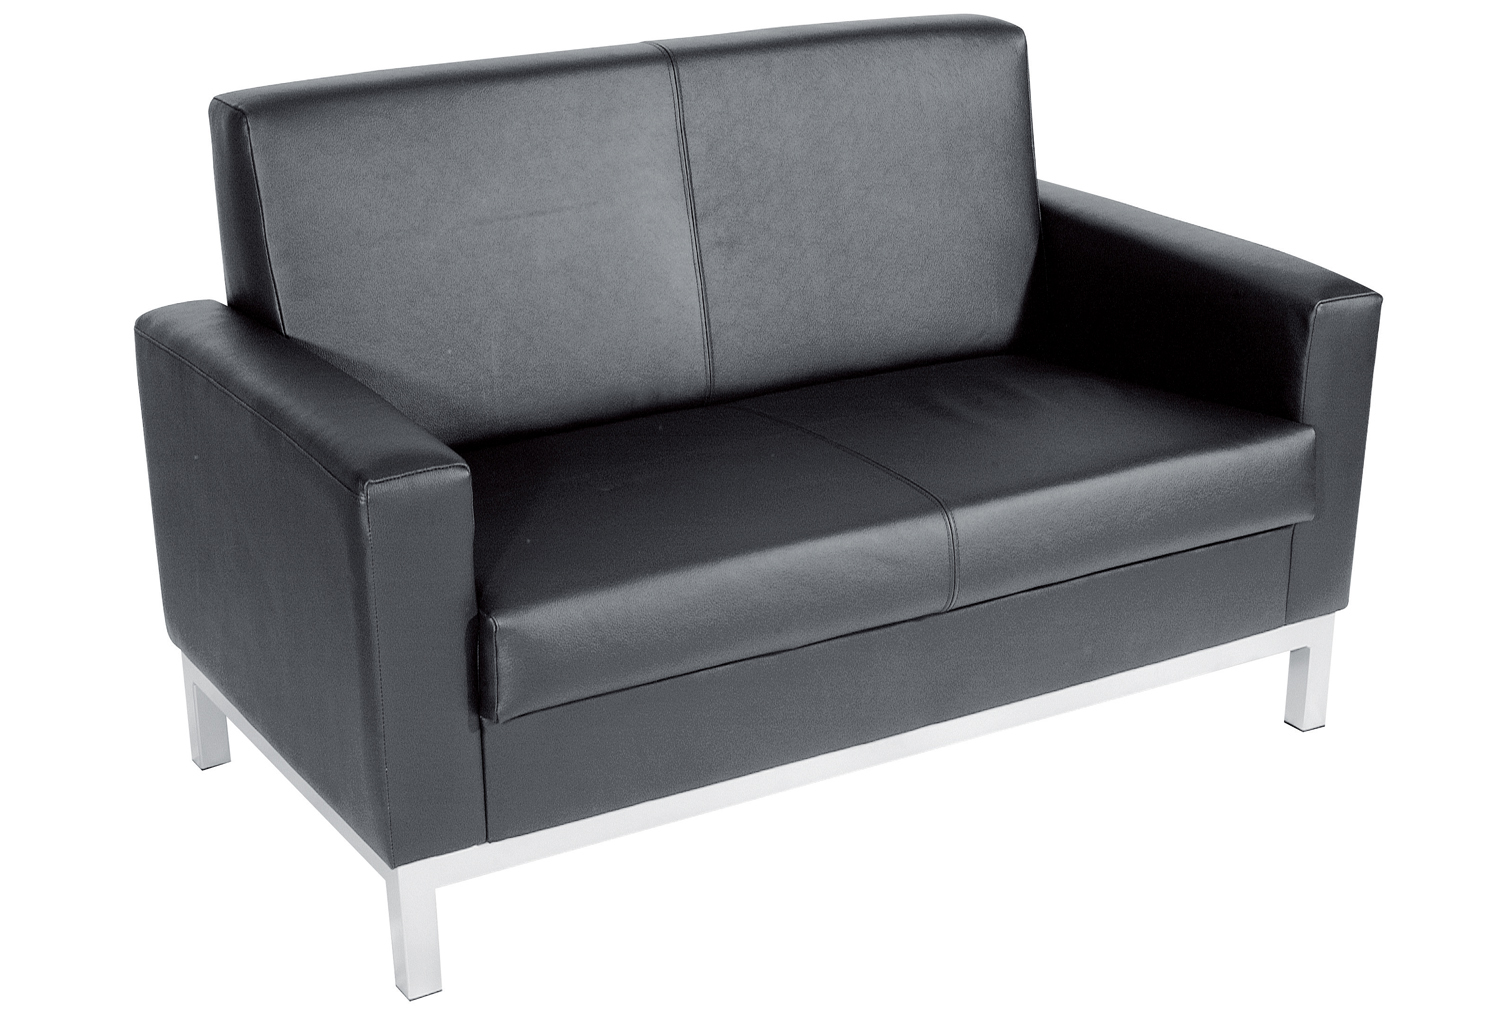 Helsinki 2 Seater Leather Sofa, Black, Fully Installed